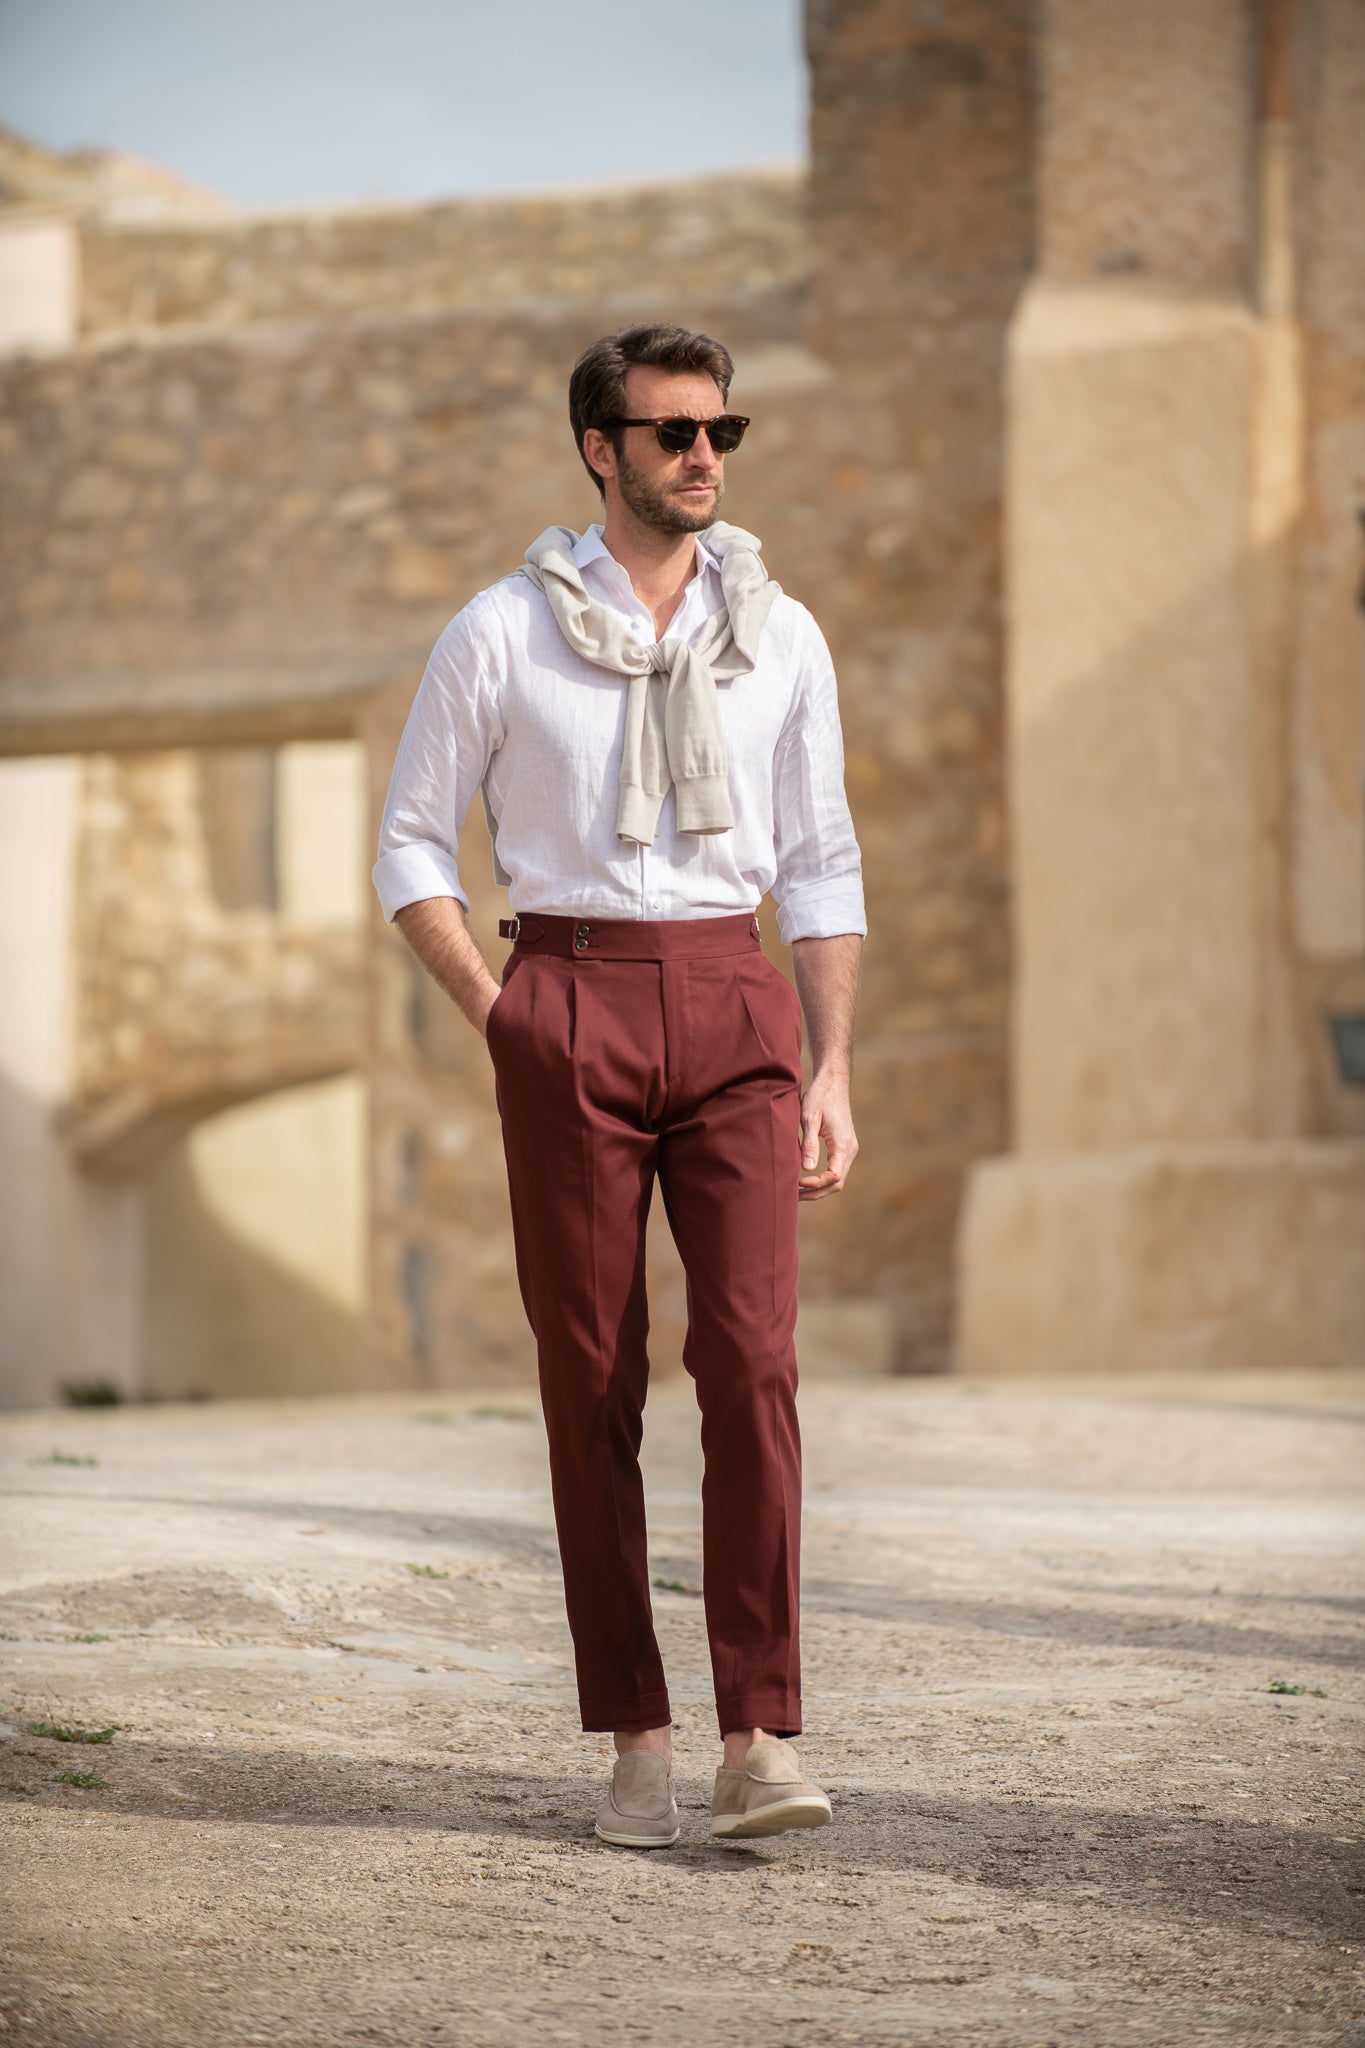 Regular Fit Tweed Trouser- Red